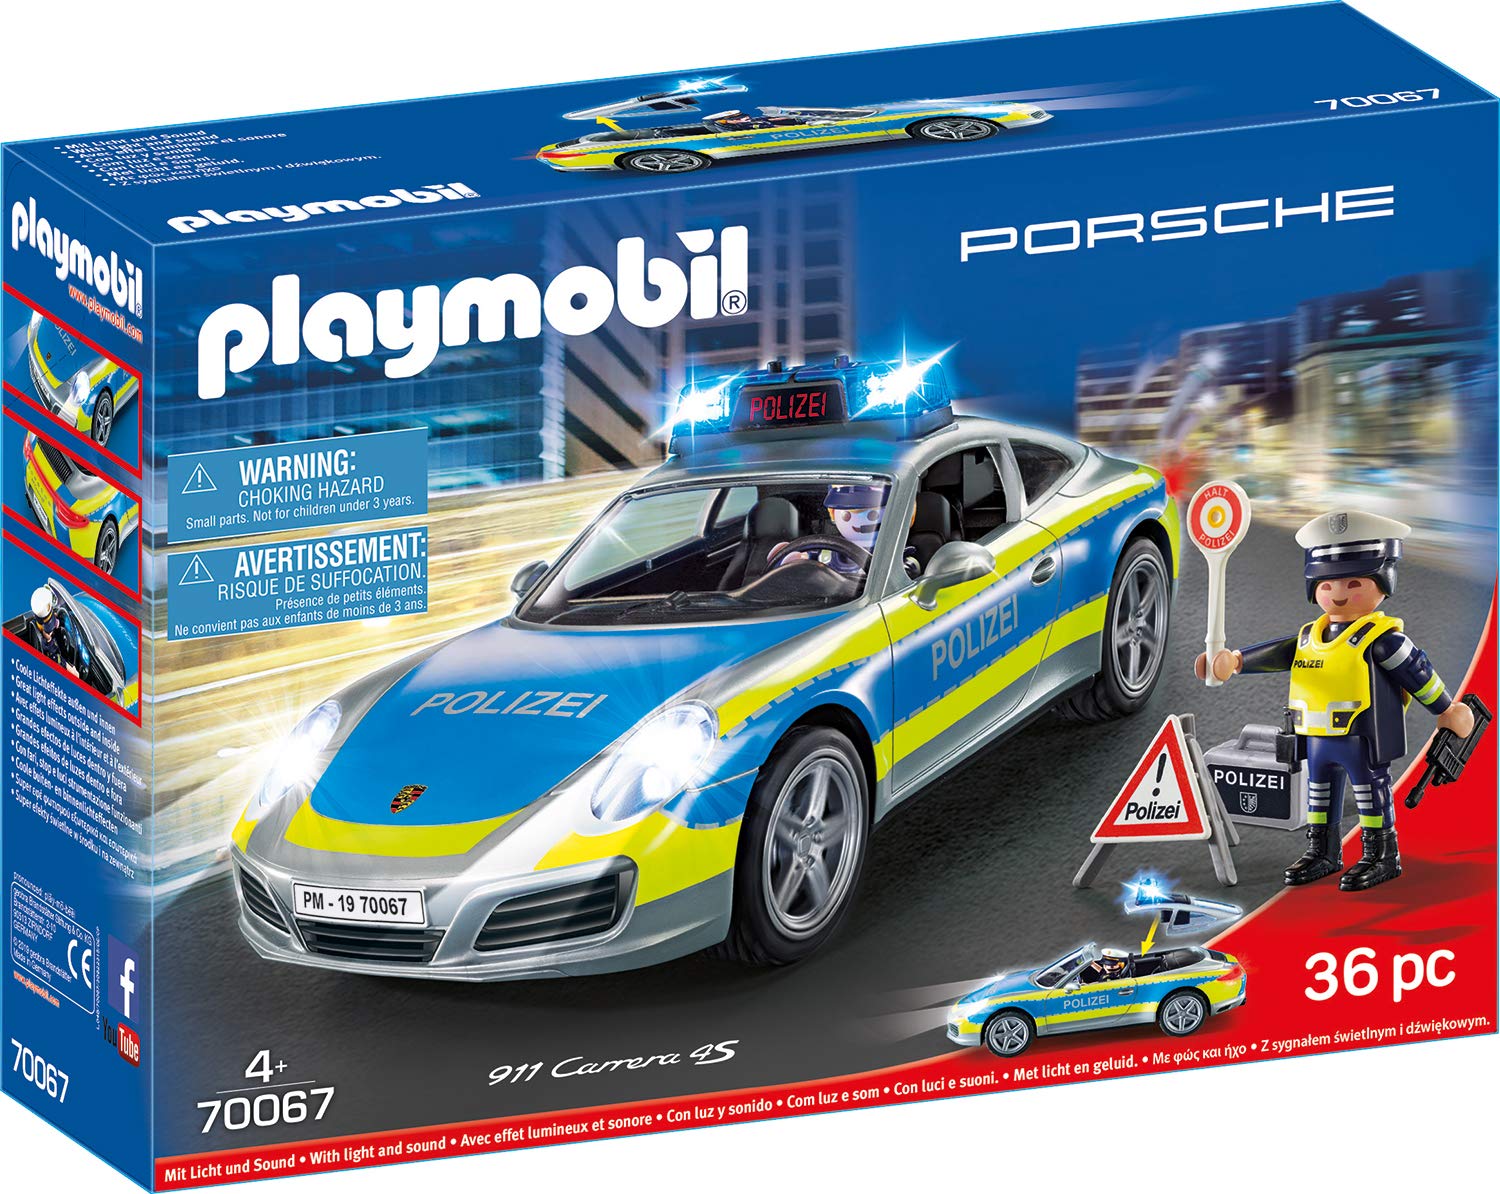 Playmobil 70067 City Action Porsche 911 Carrera 4S Polizei